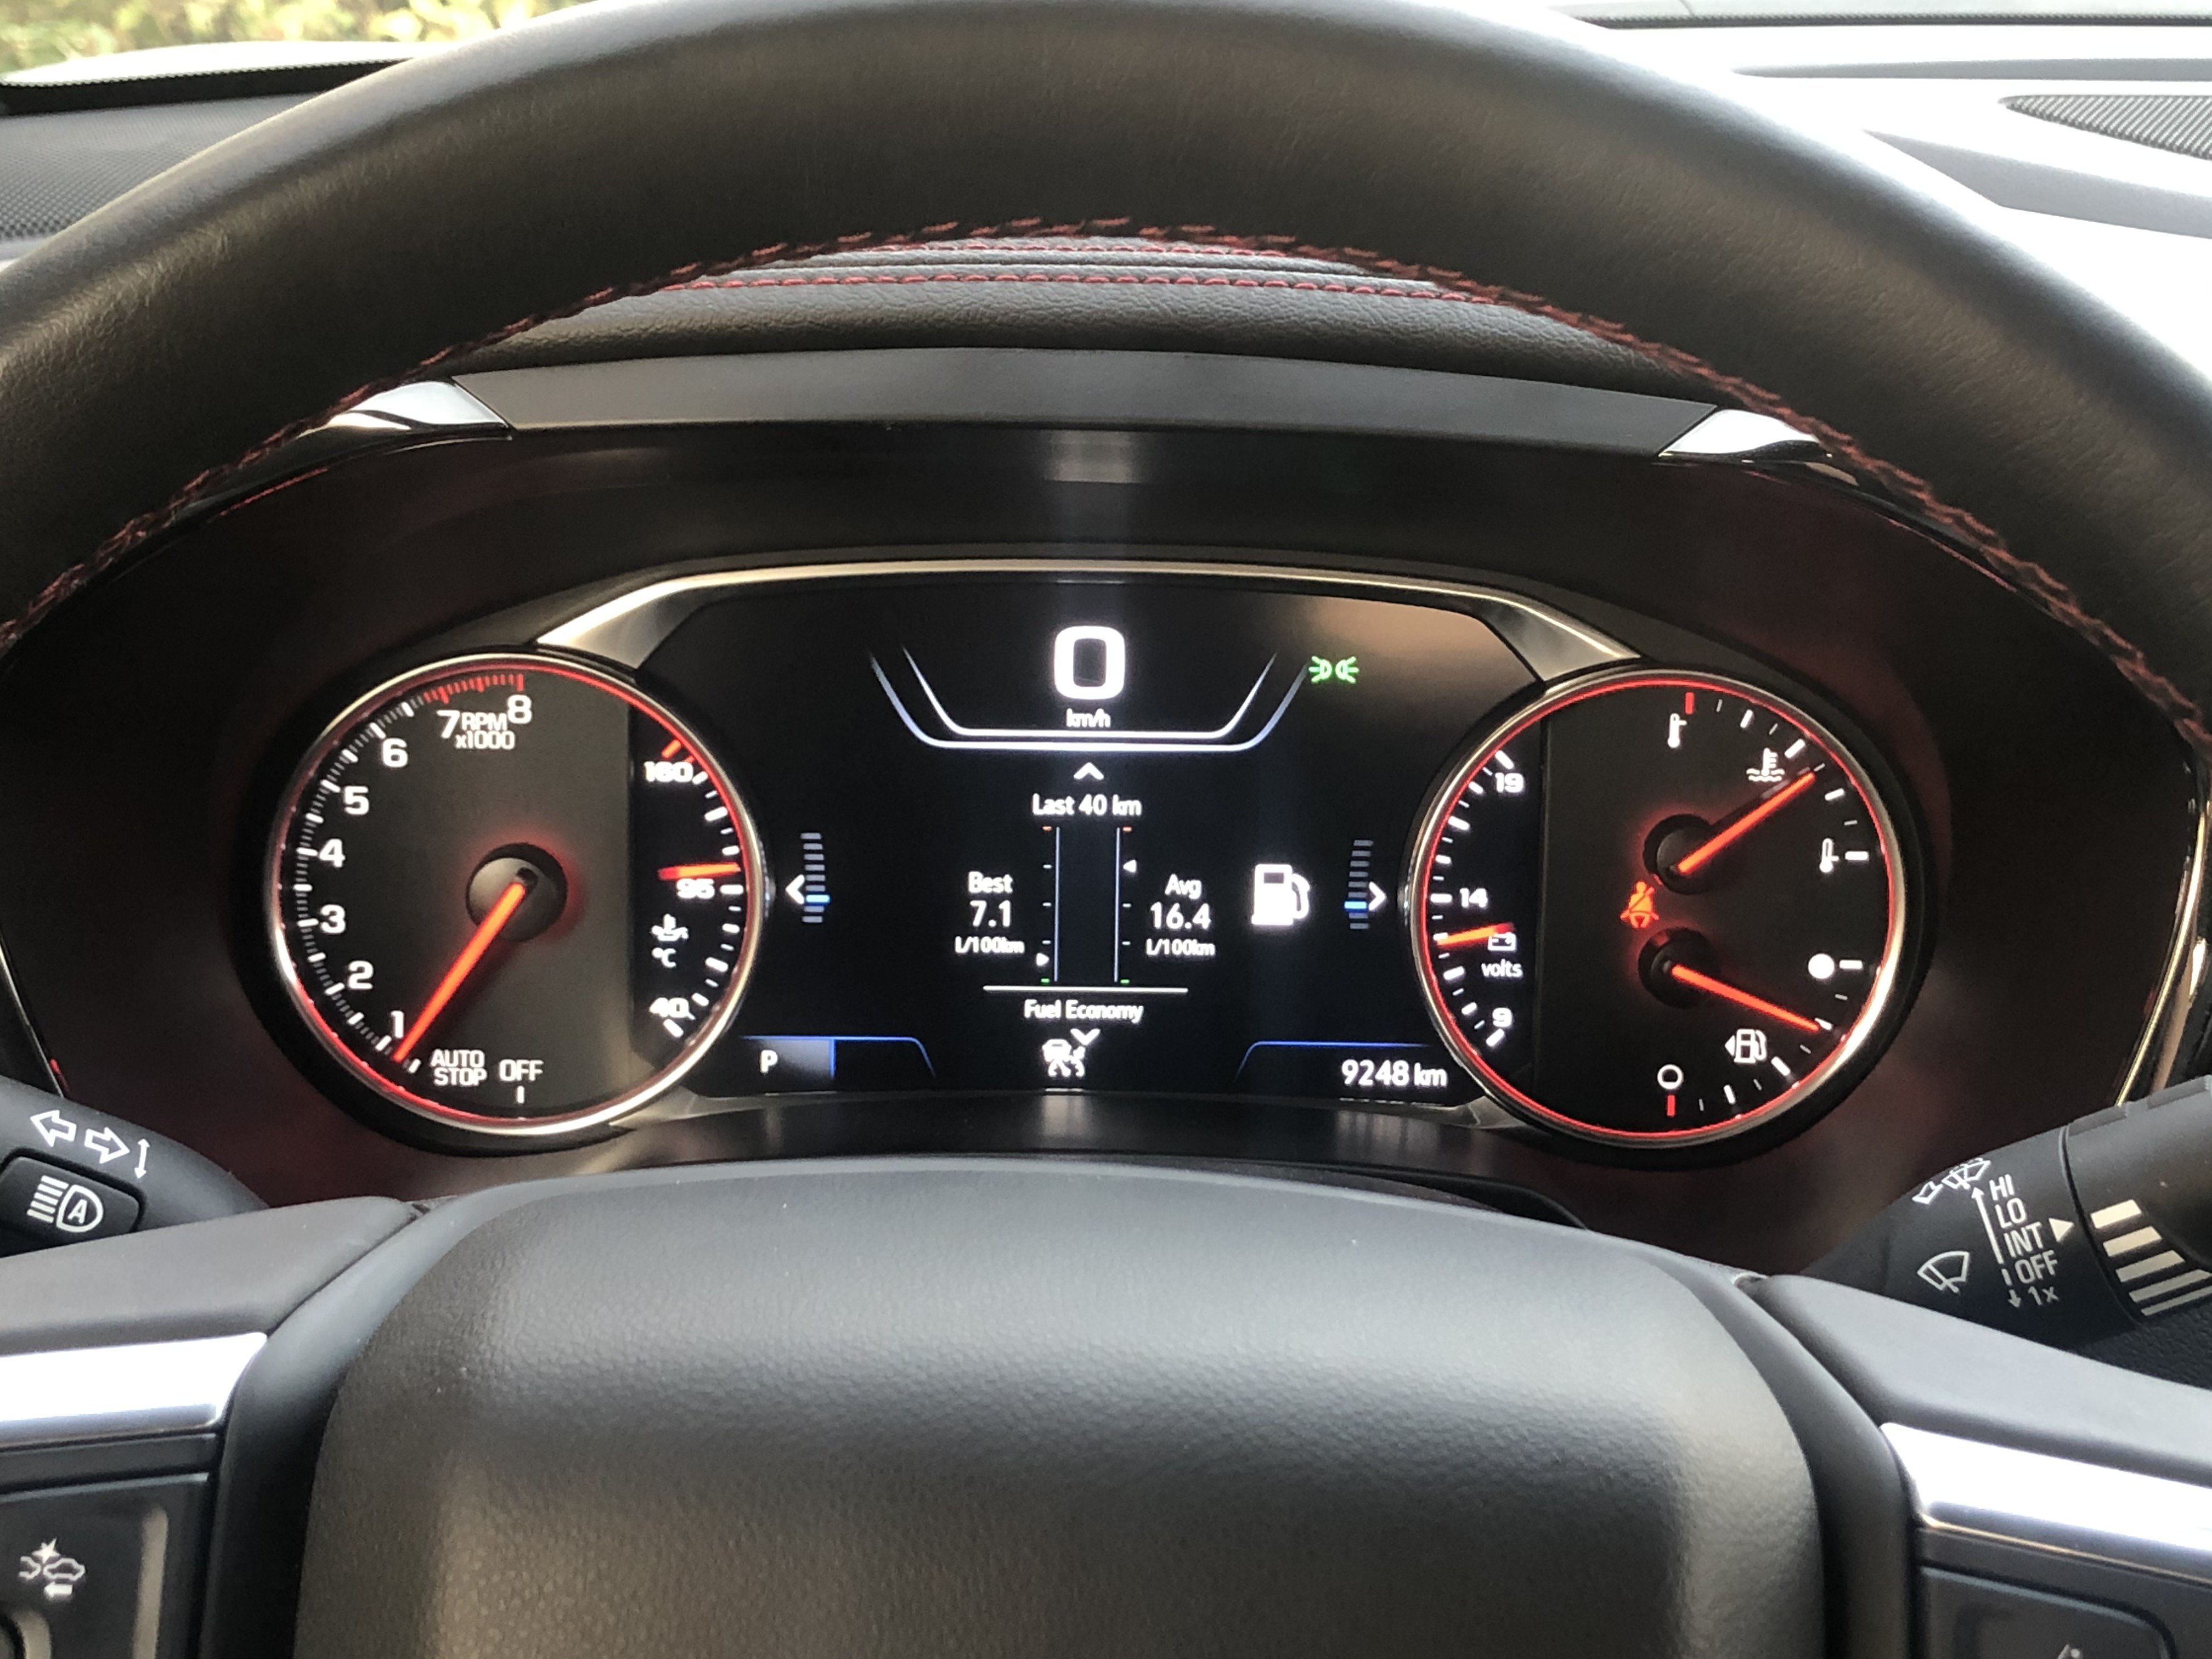 Chevrolet Blazer 2019 Speedometer insights and metrics